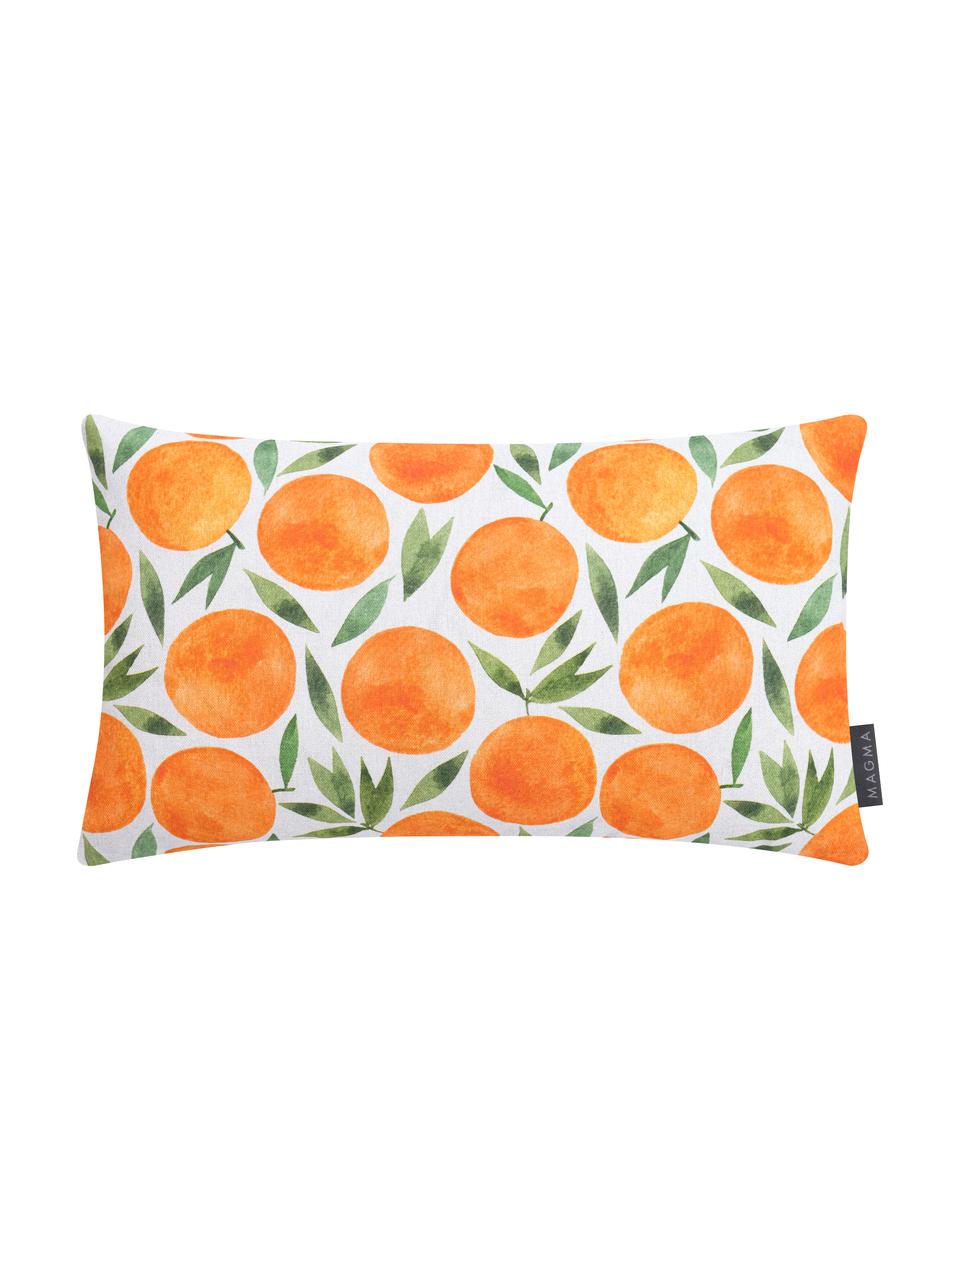 Federa arredo con motivo estivo Orange, Tessuto: mezzo panama, Arancione, bianco, verde, Larg. 30 x Lung. 50 cm